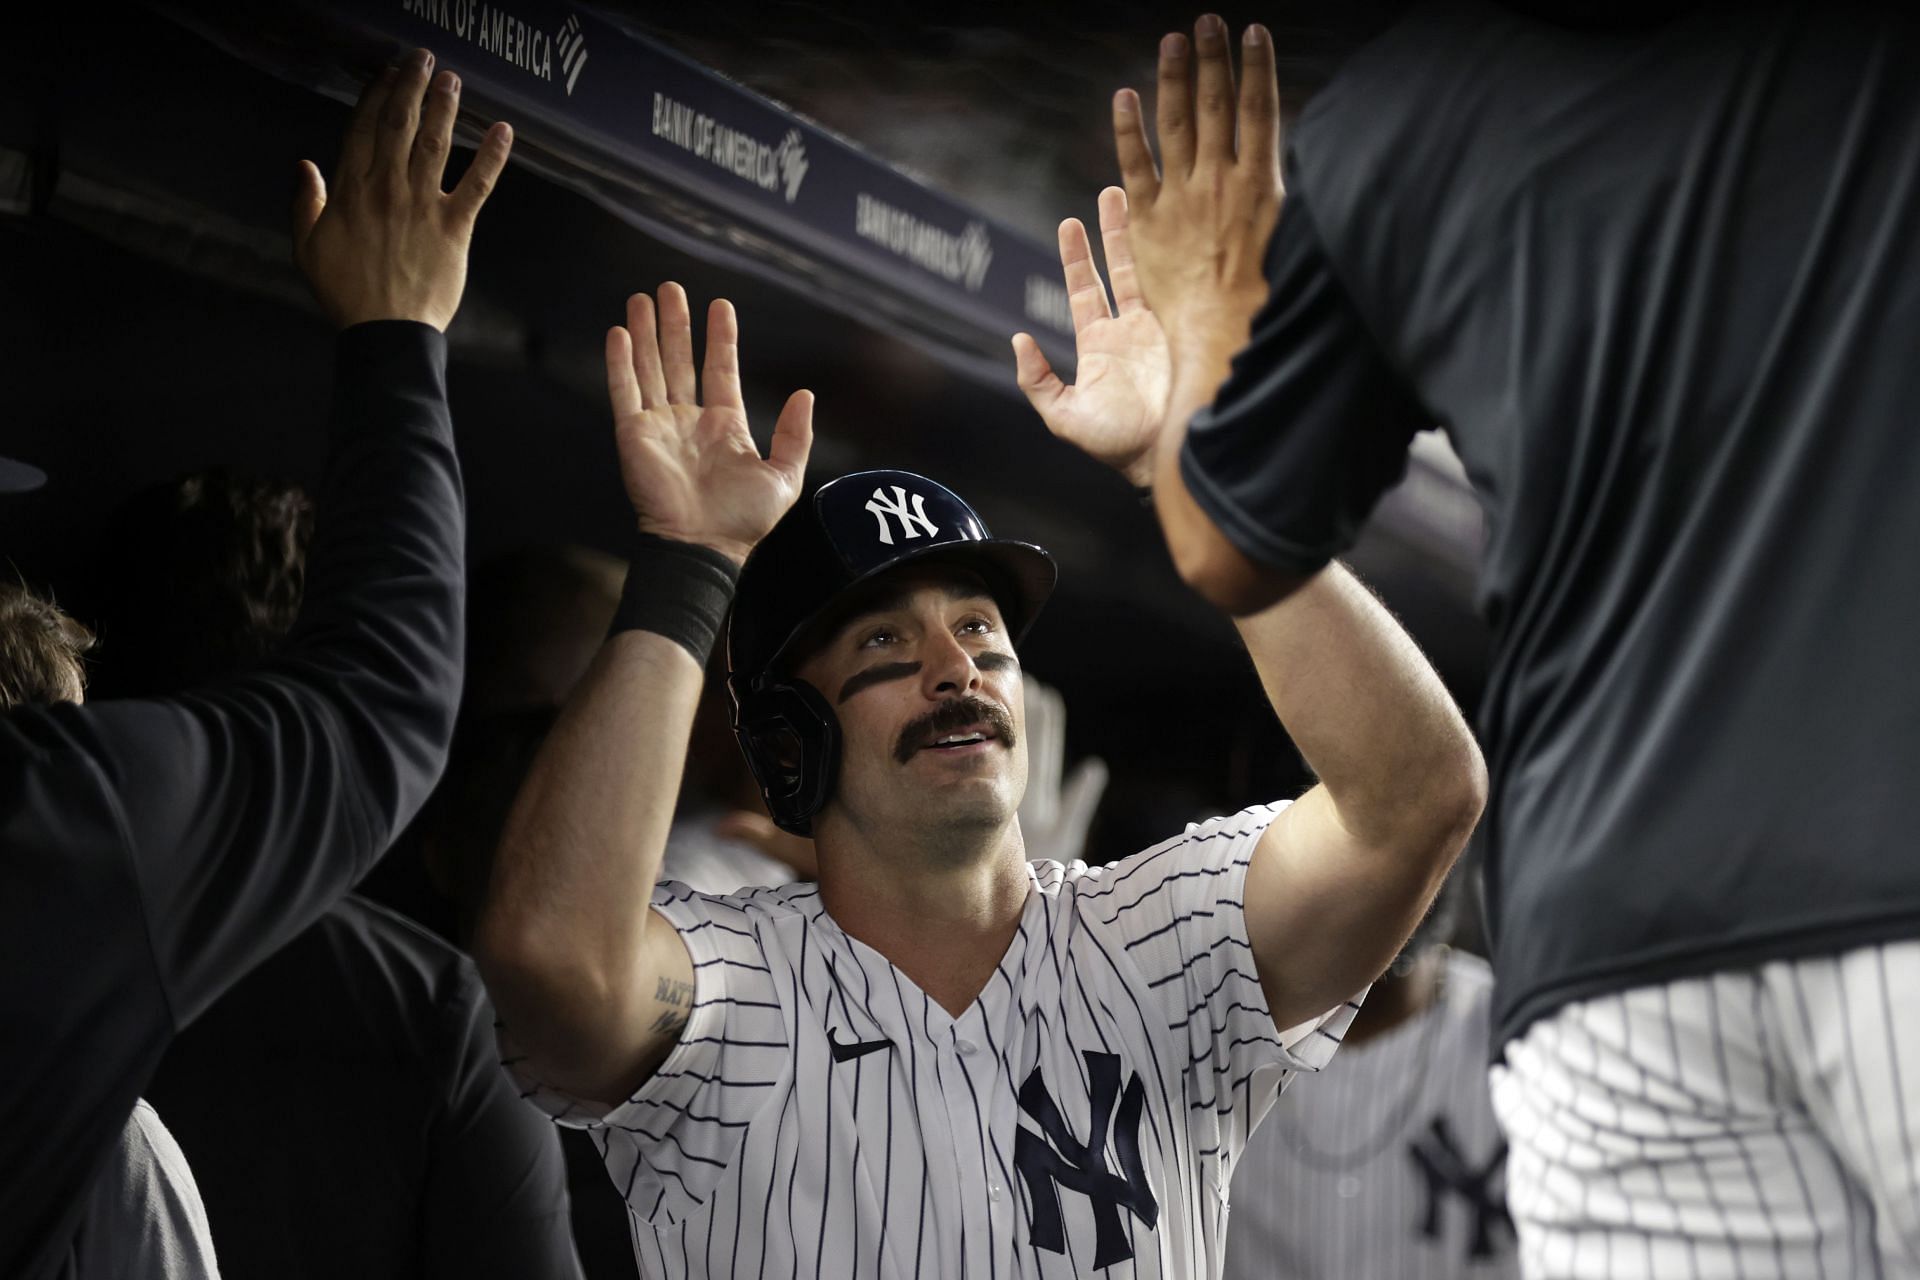 Matt Carpenter gets real on 'second chance' amid breakout Yankees stint